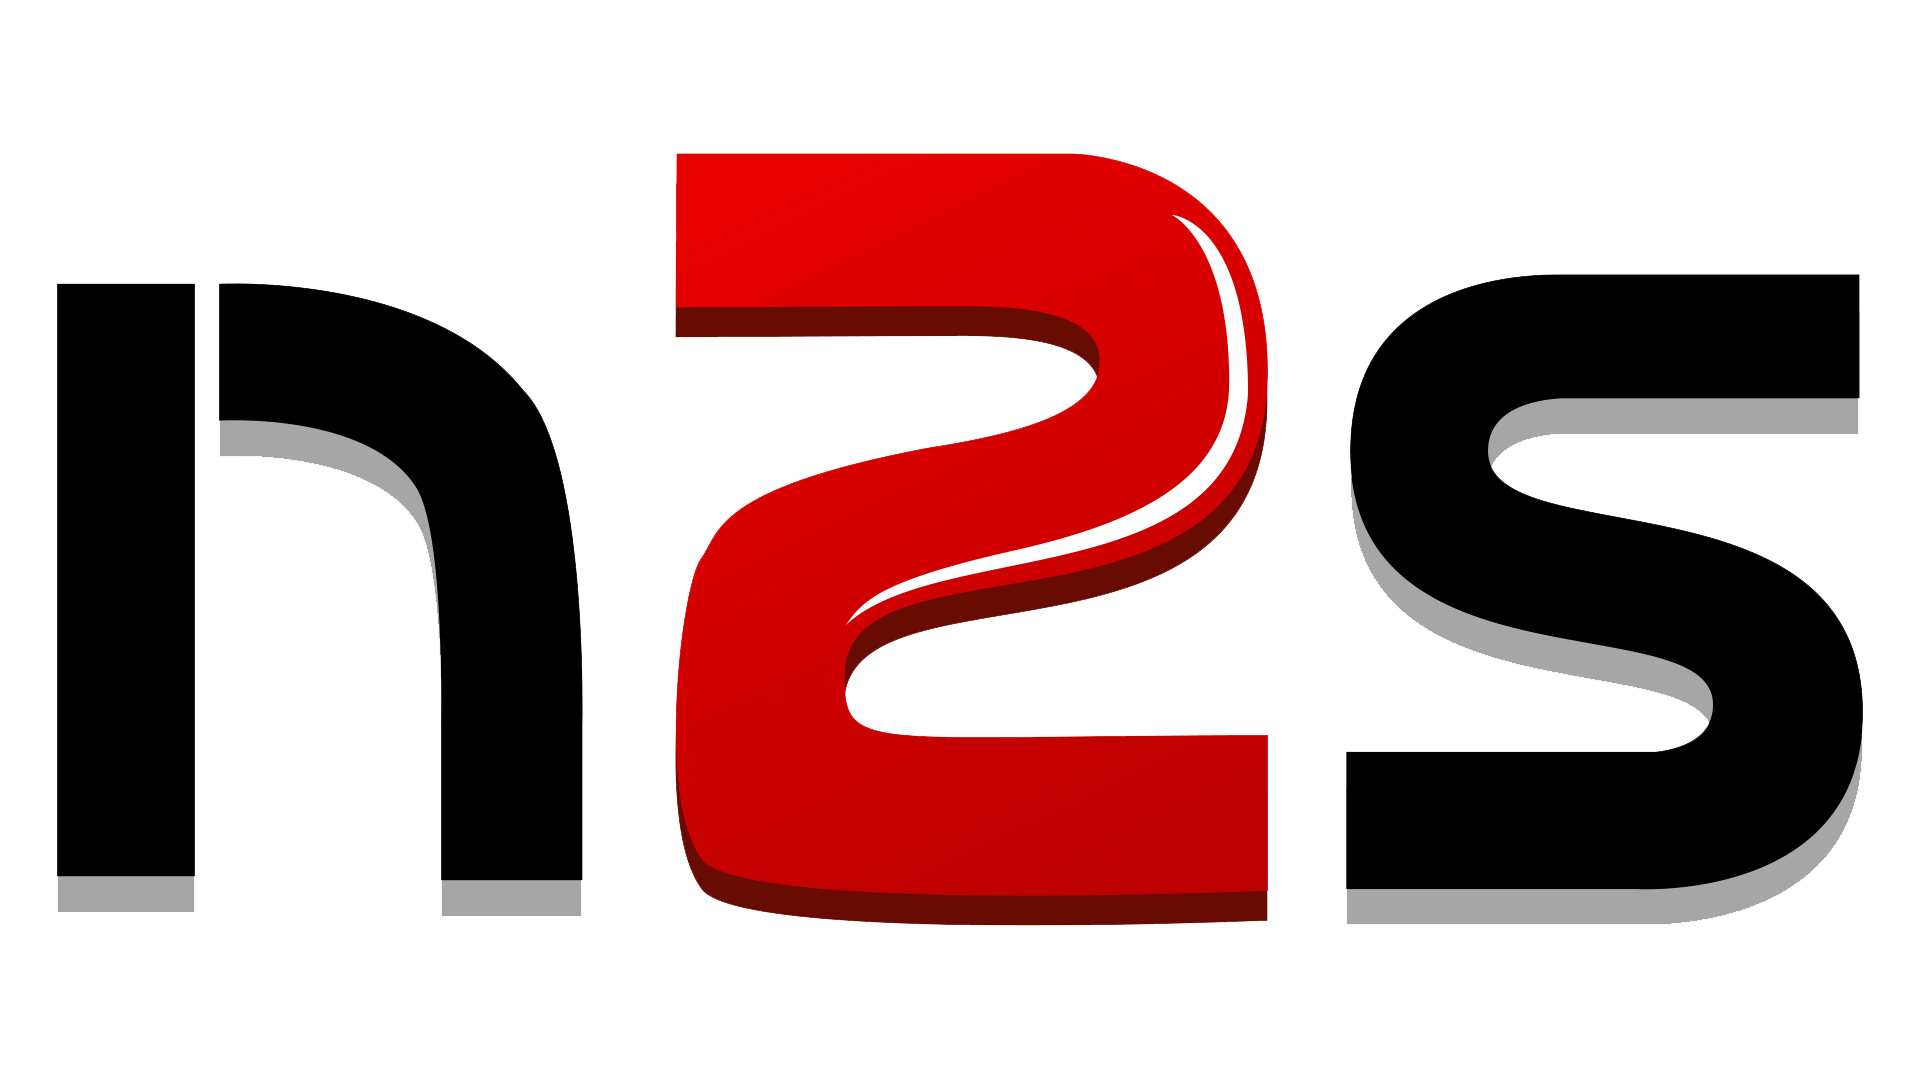 Net2Source Logo